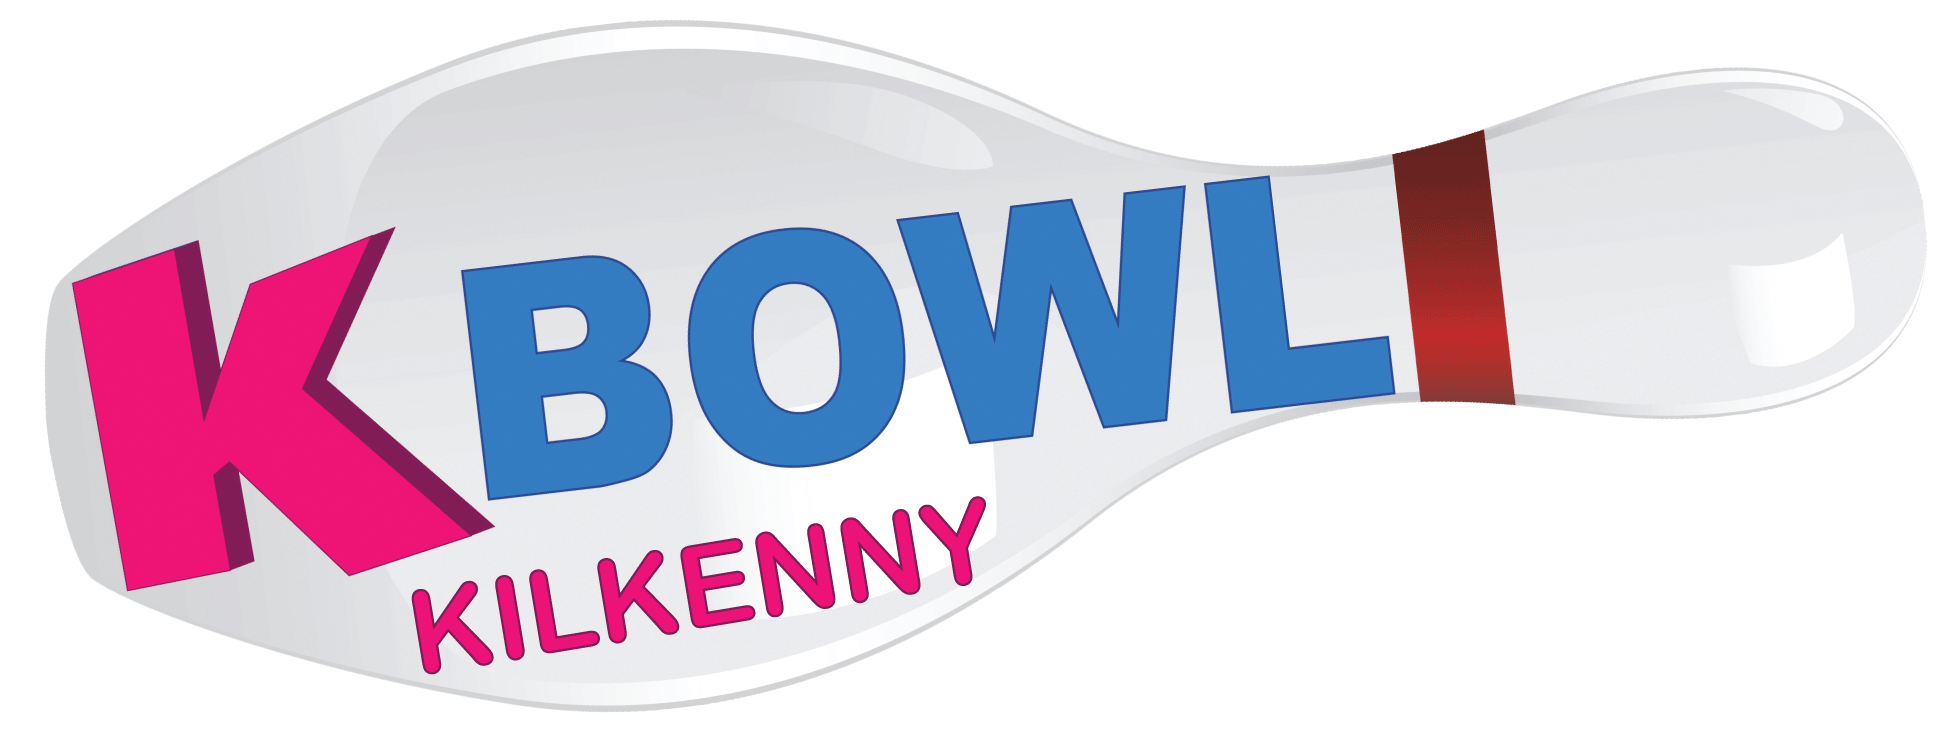 Kbowl Kilkenny